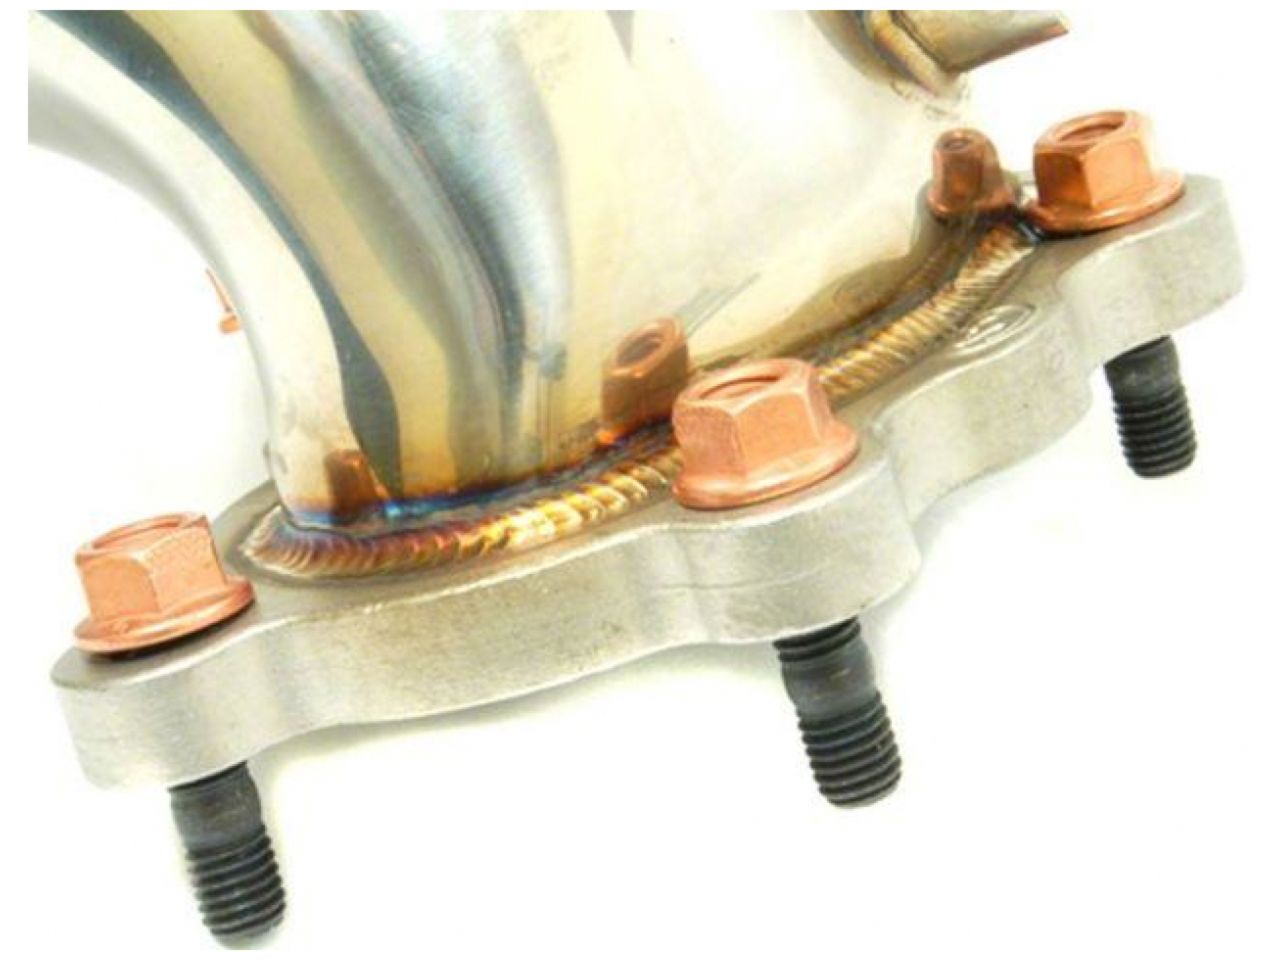 Diftech Copper Metric Flange Exhaust Lock Nut M8 x 1.25